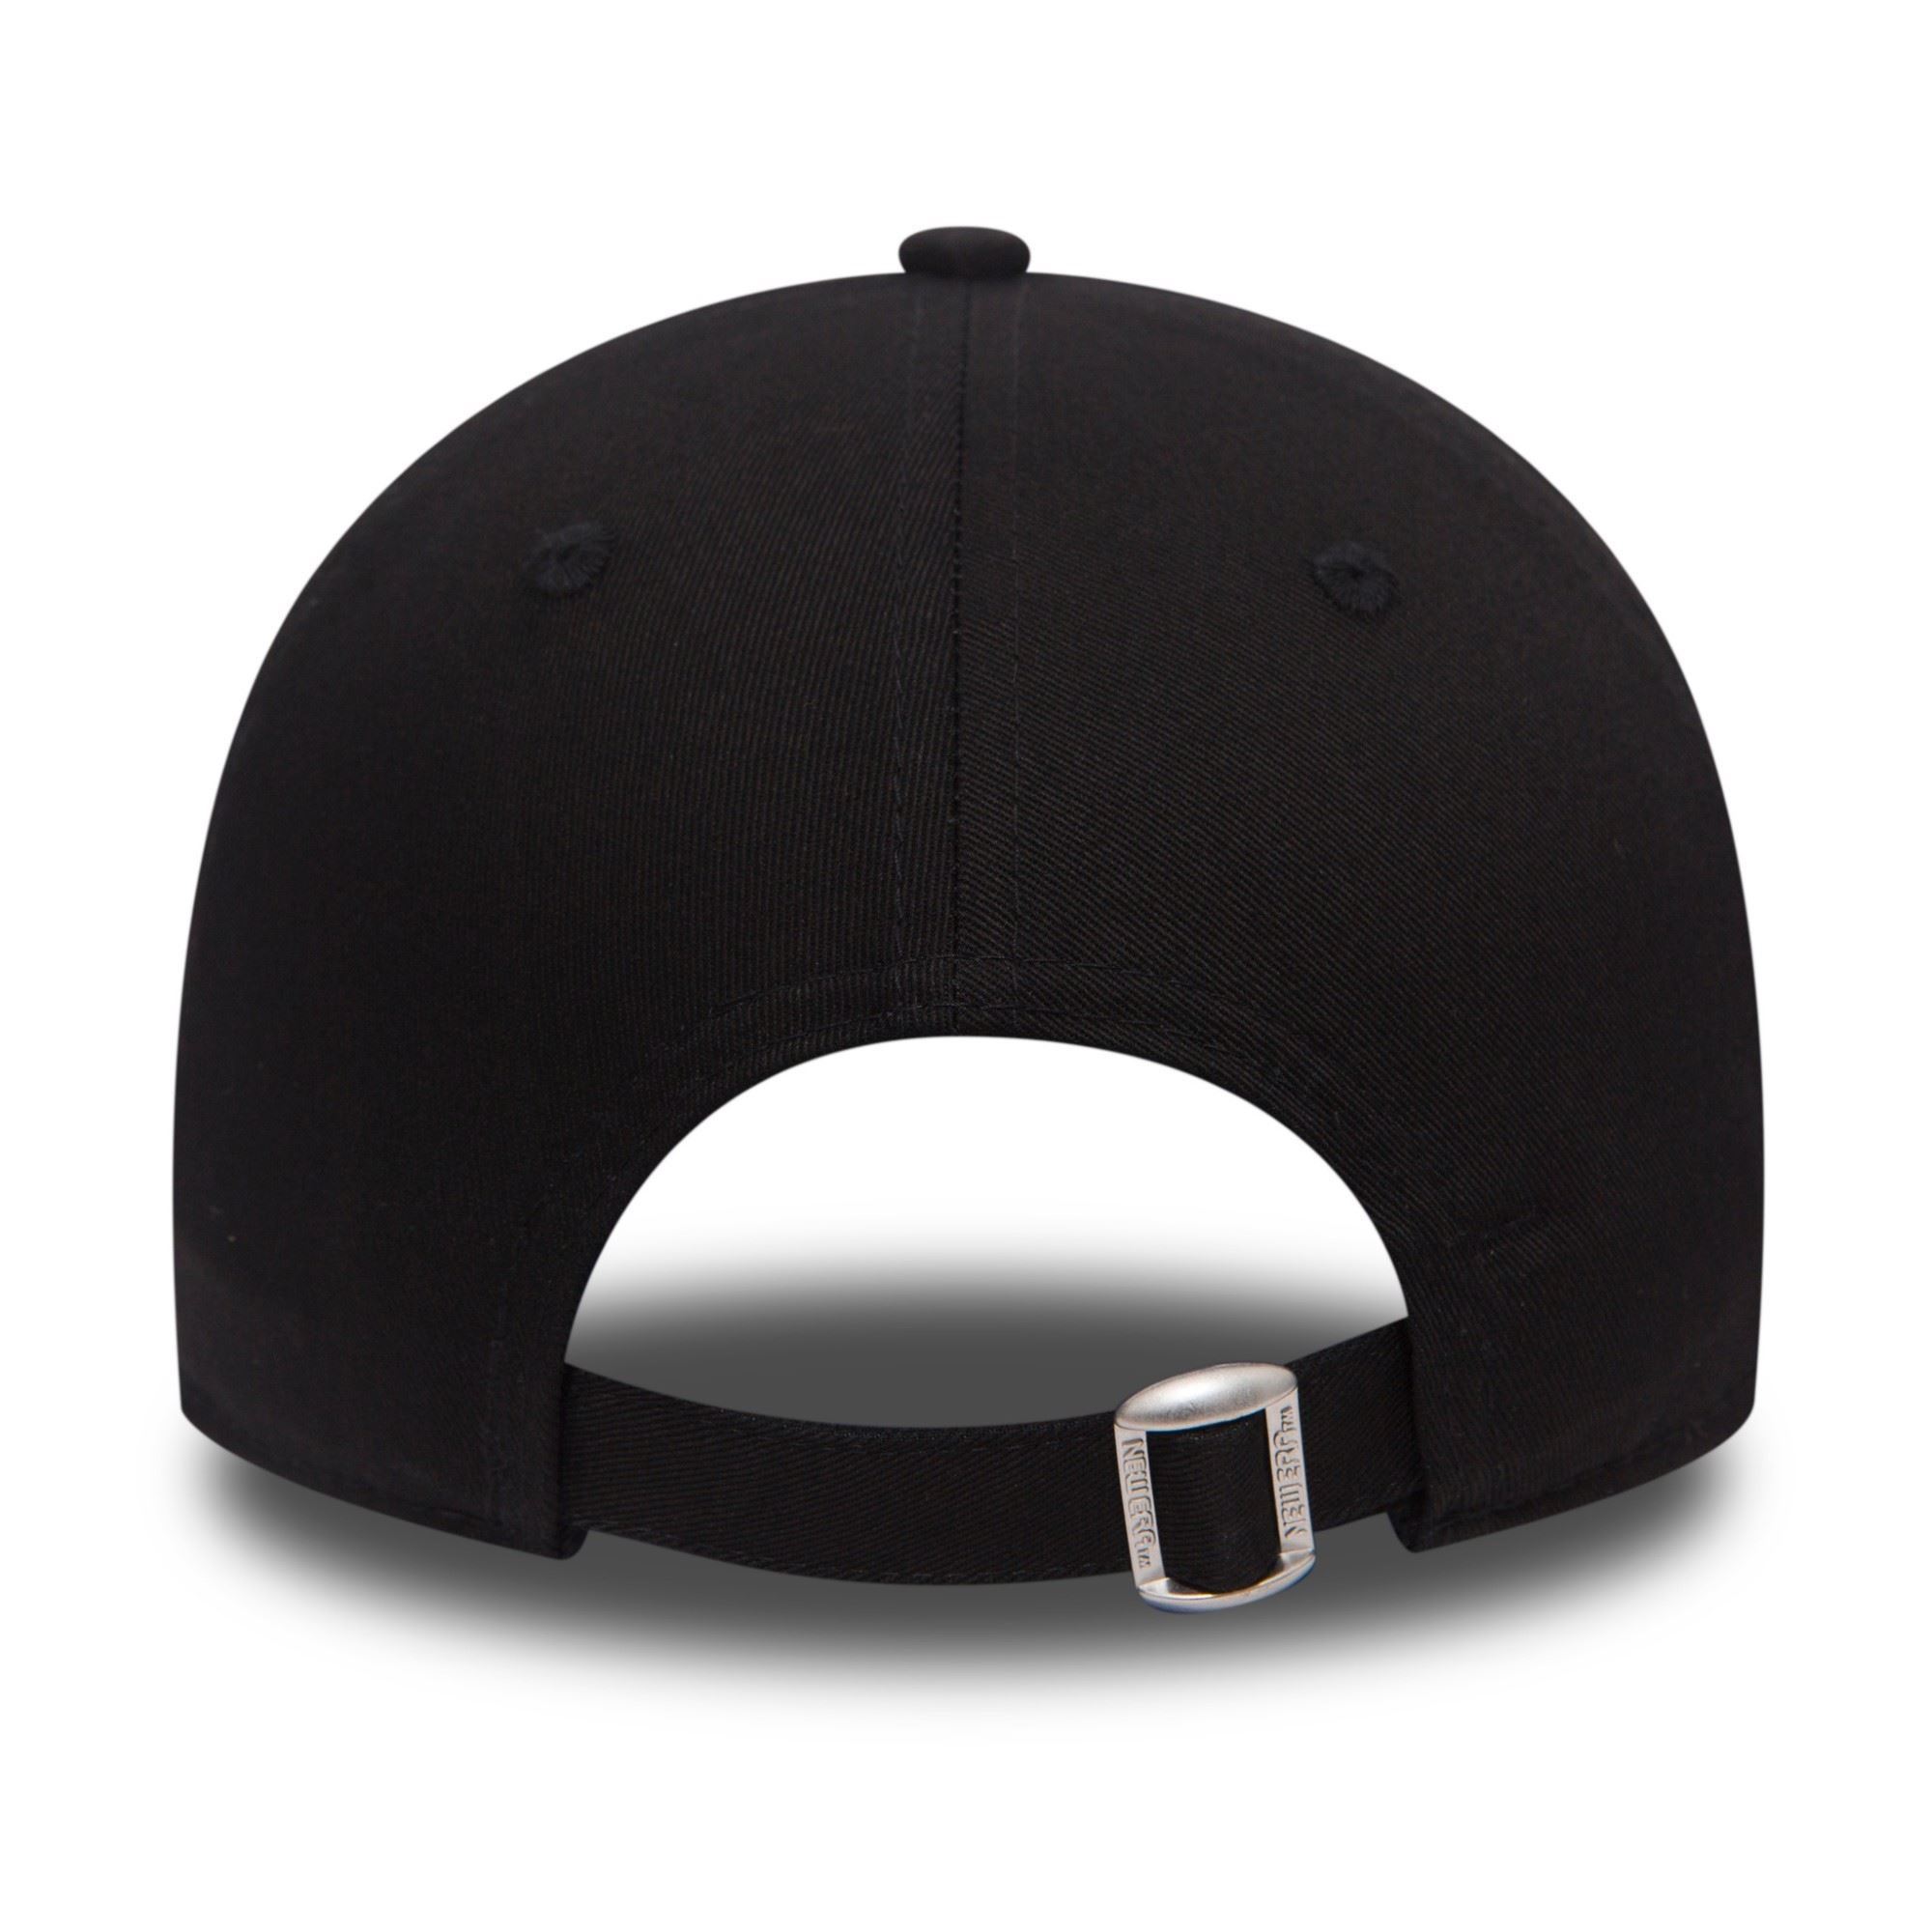 Los Angeles Dodgers MLB League Essential Black 9Forty Adjustable Cap for Kids New Era